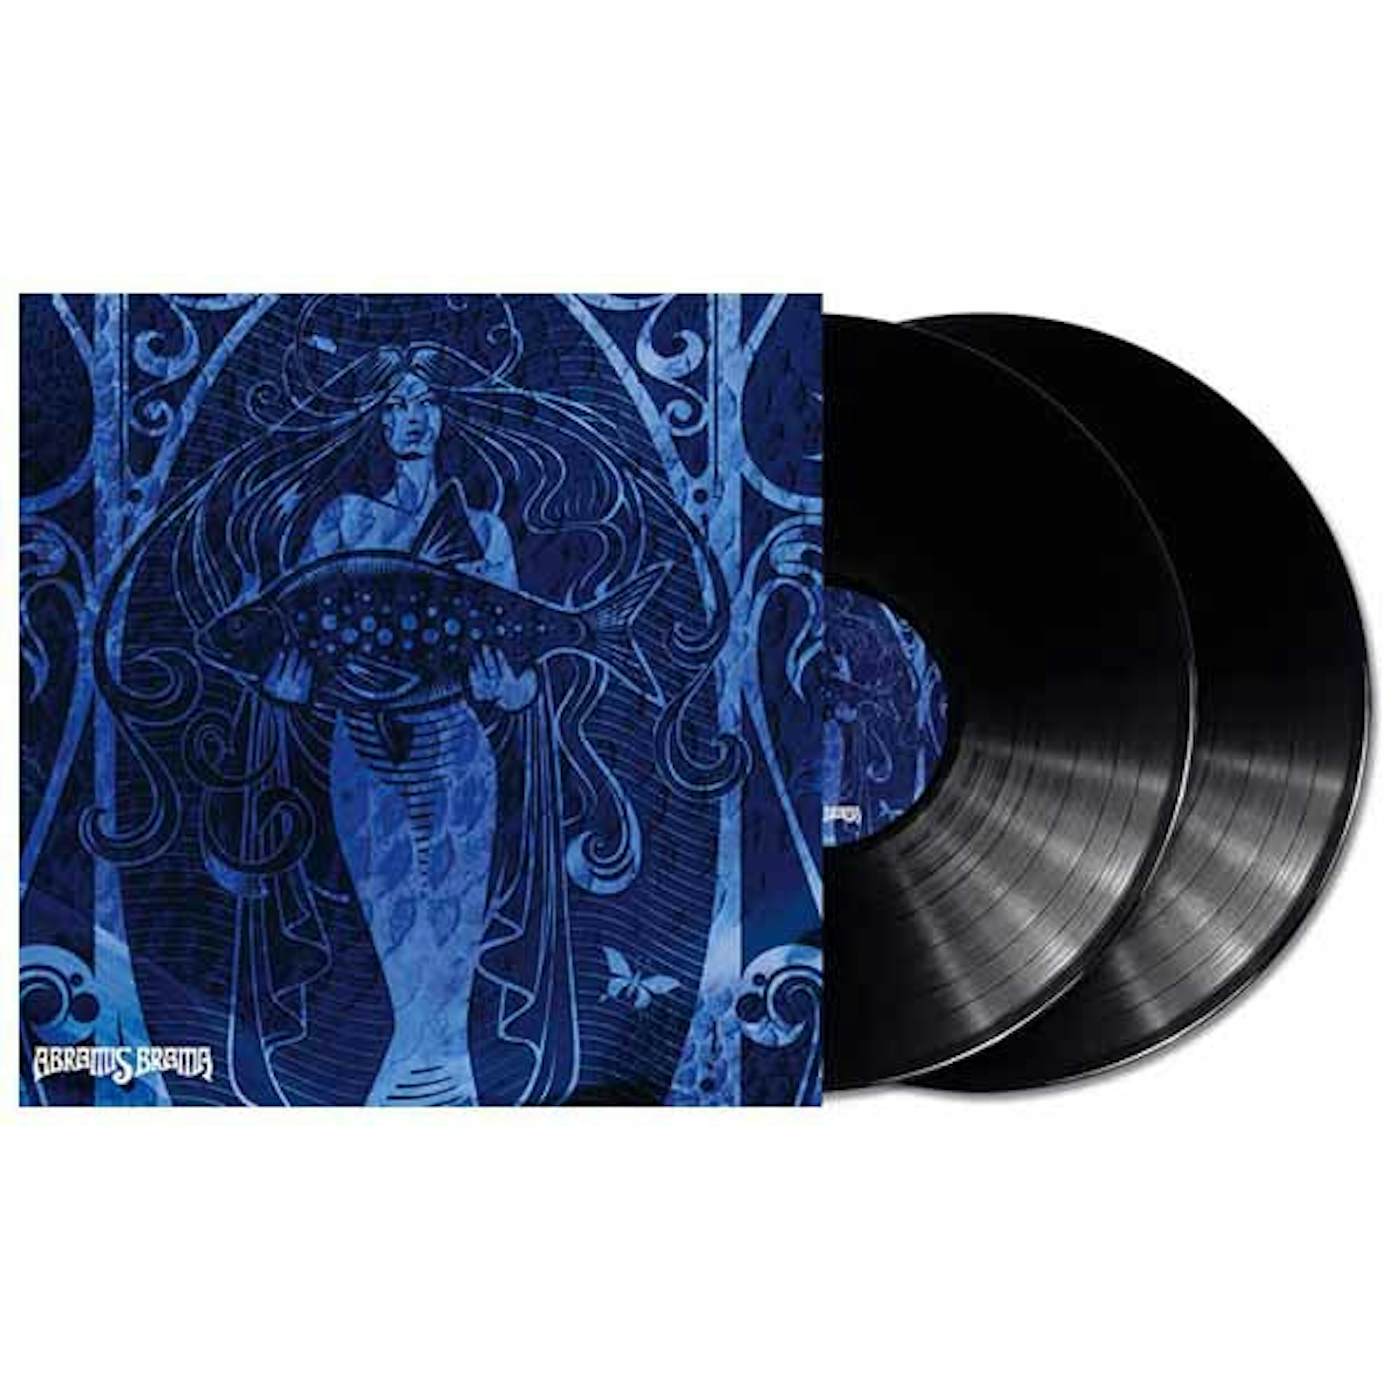 Abramis Brama LP - Enkel Biljett (Vinyl)